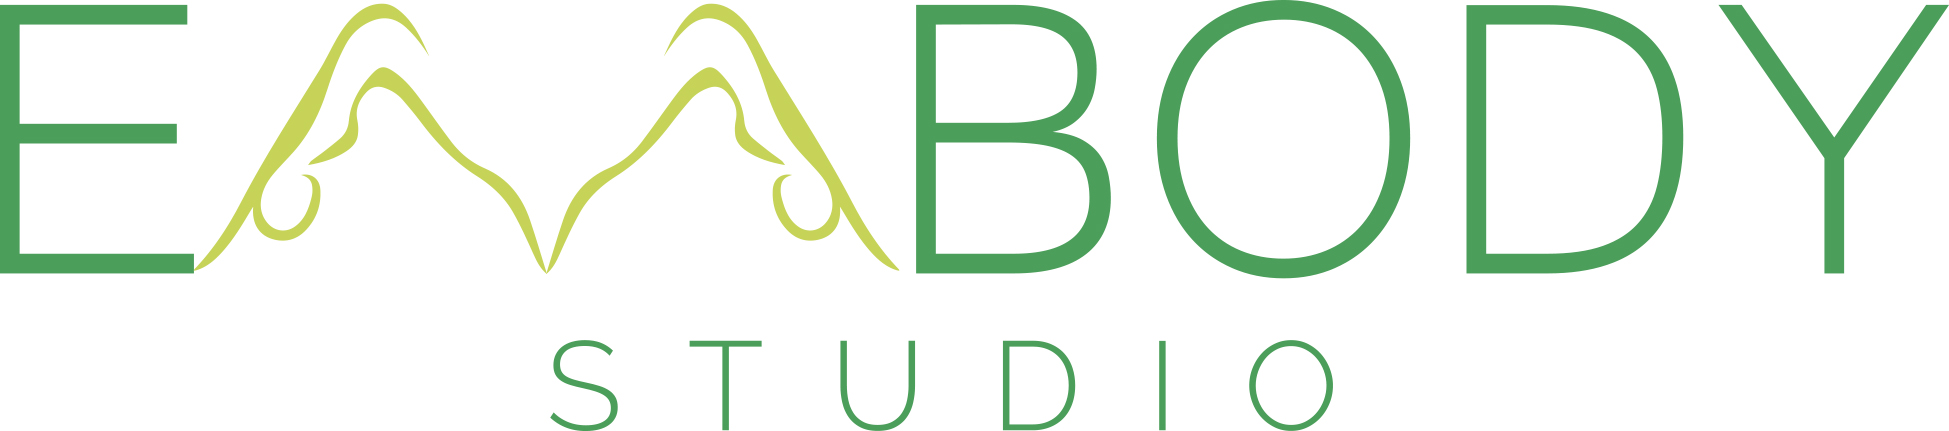 logo-embody-studio.jpg FATTO.jpg